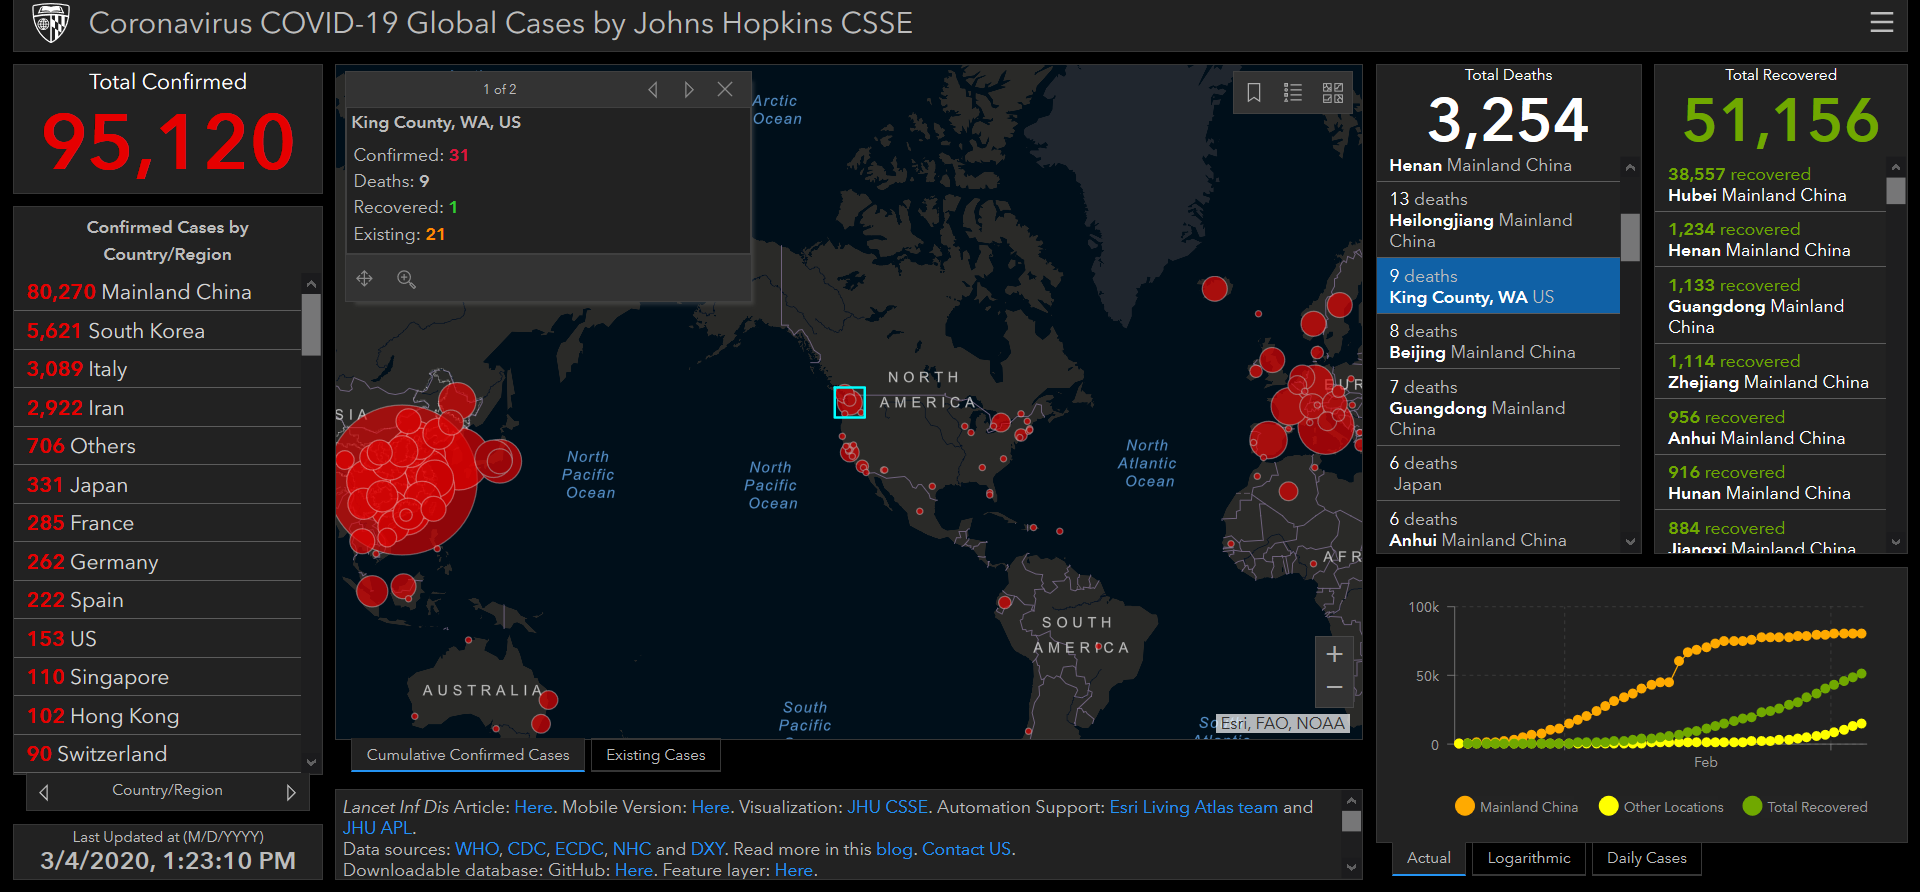 Coronavirus COVID-19 Global Cases by Johns Hopkins CSSE